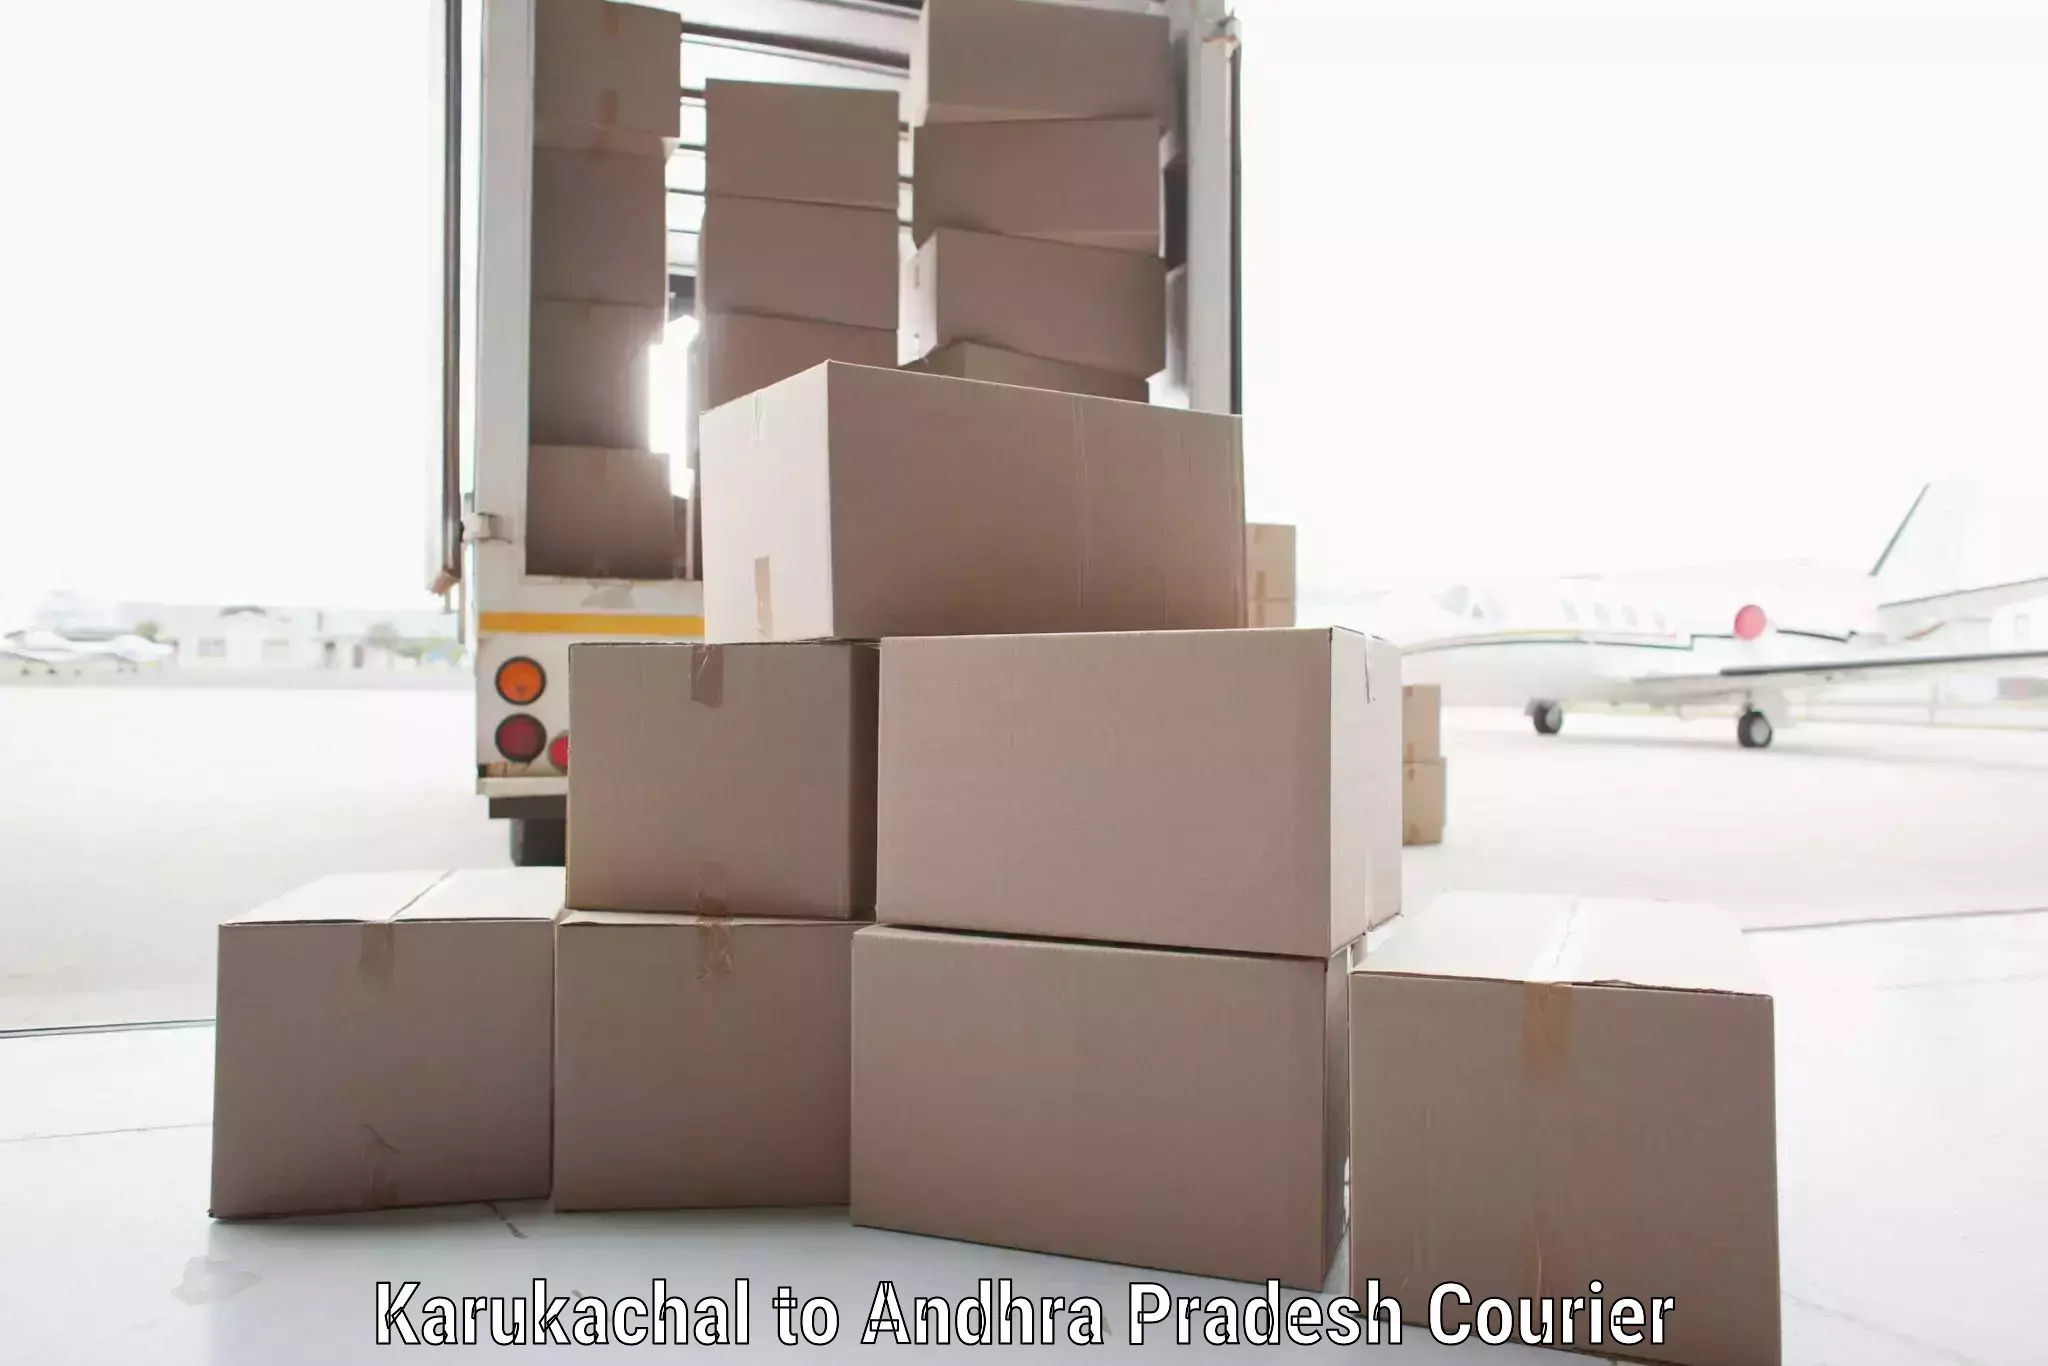 High-capacity parcel service Karukachal to Narsapur